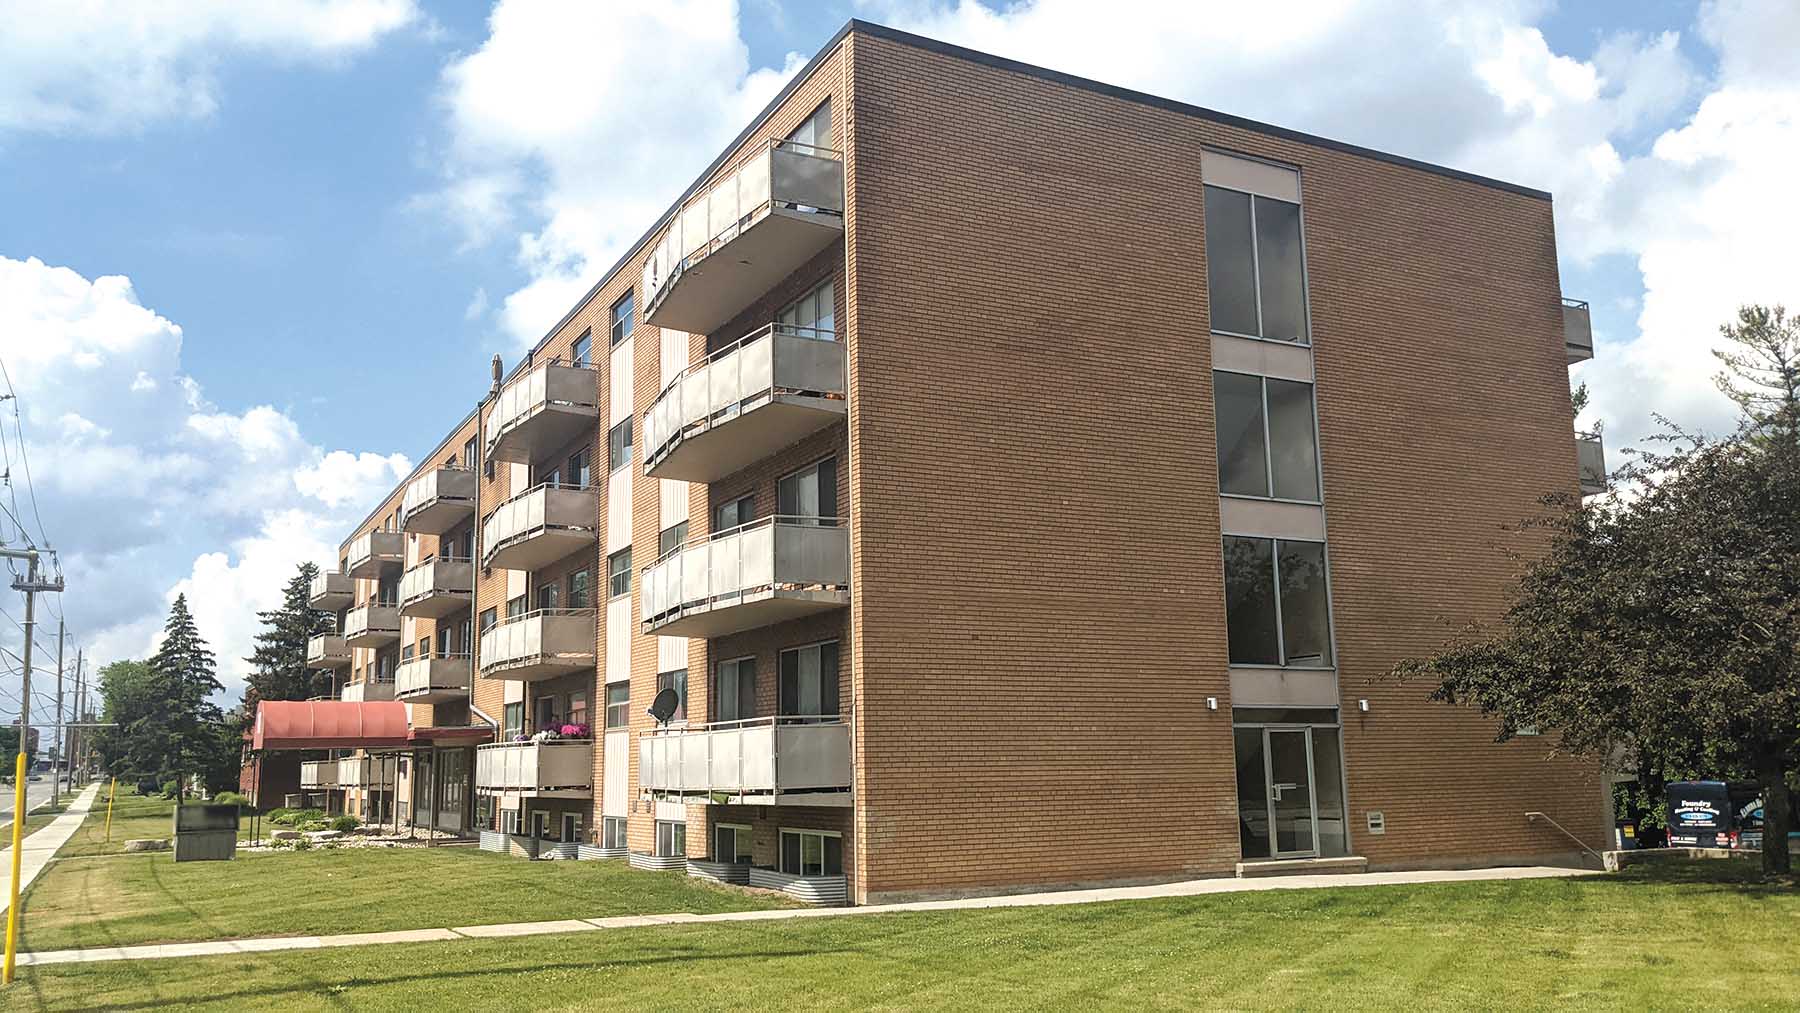 42 Unit Apartment Building – Kitchener